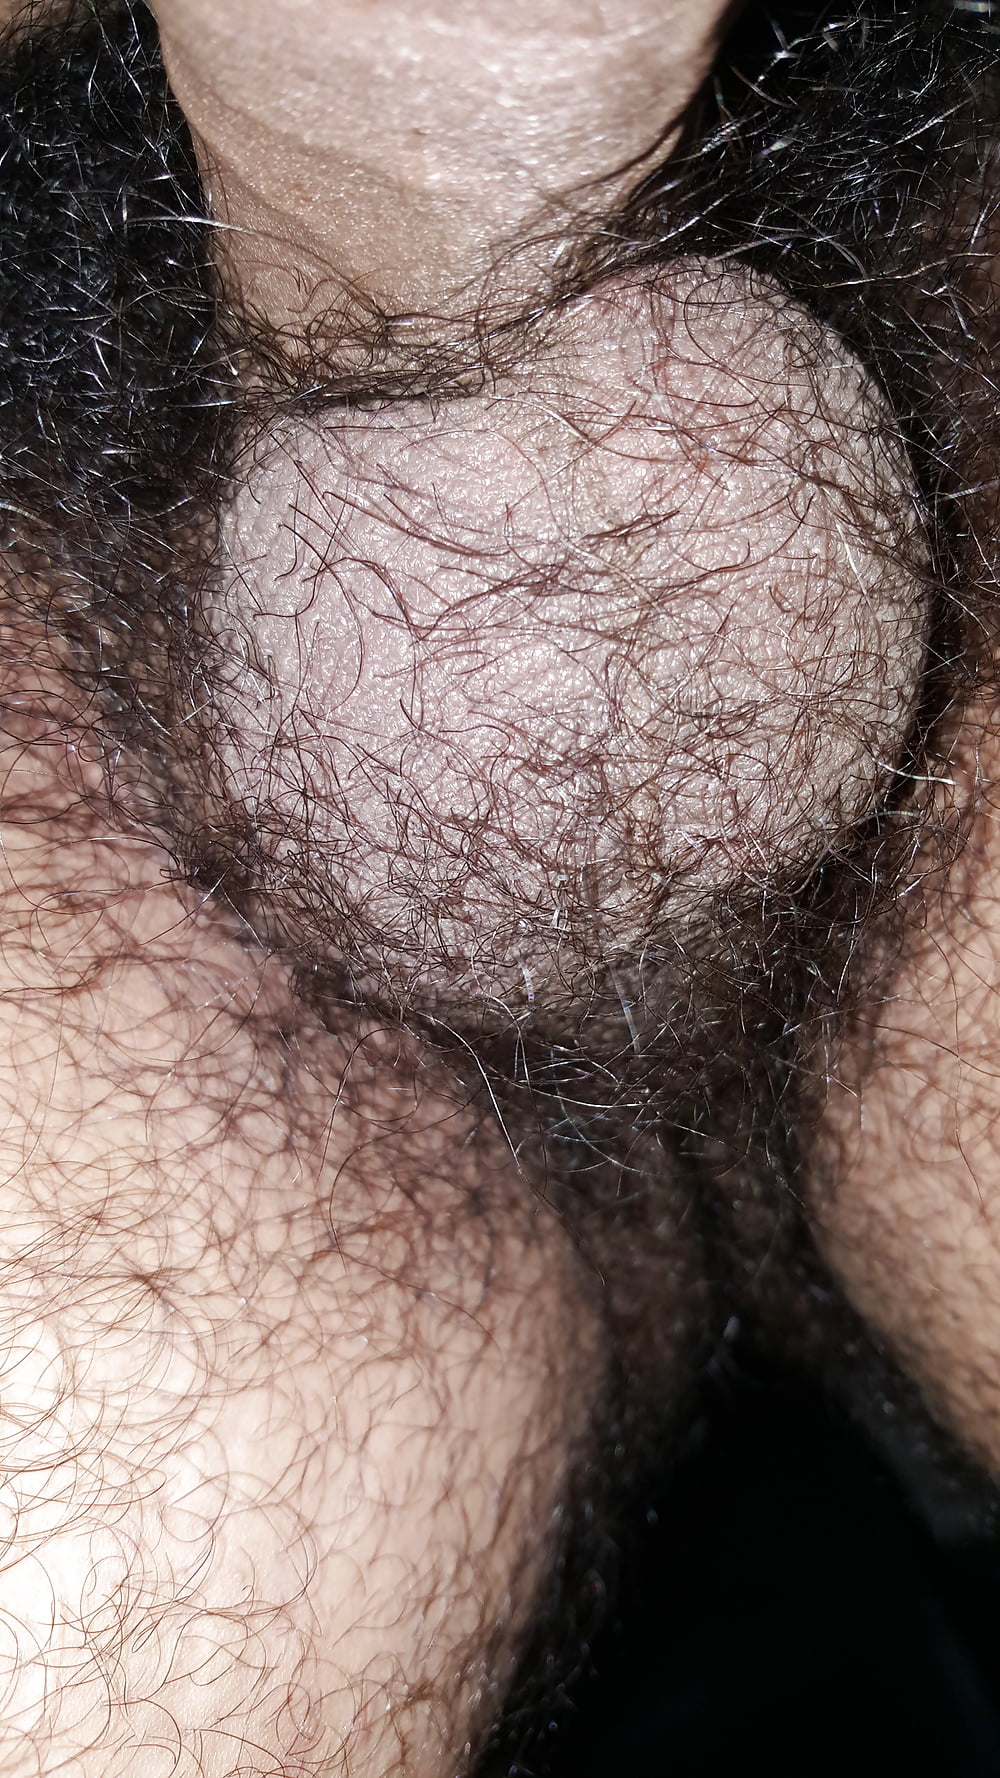 Wanna lick these hairy balls? 